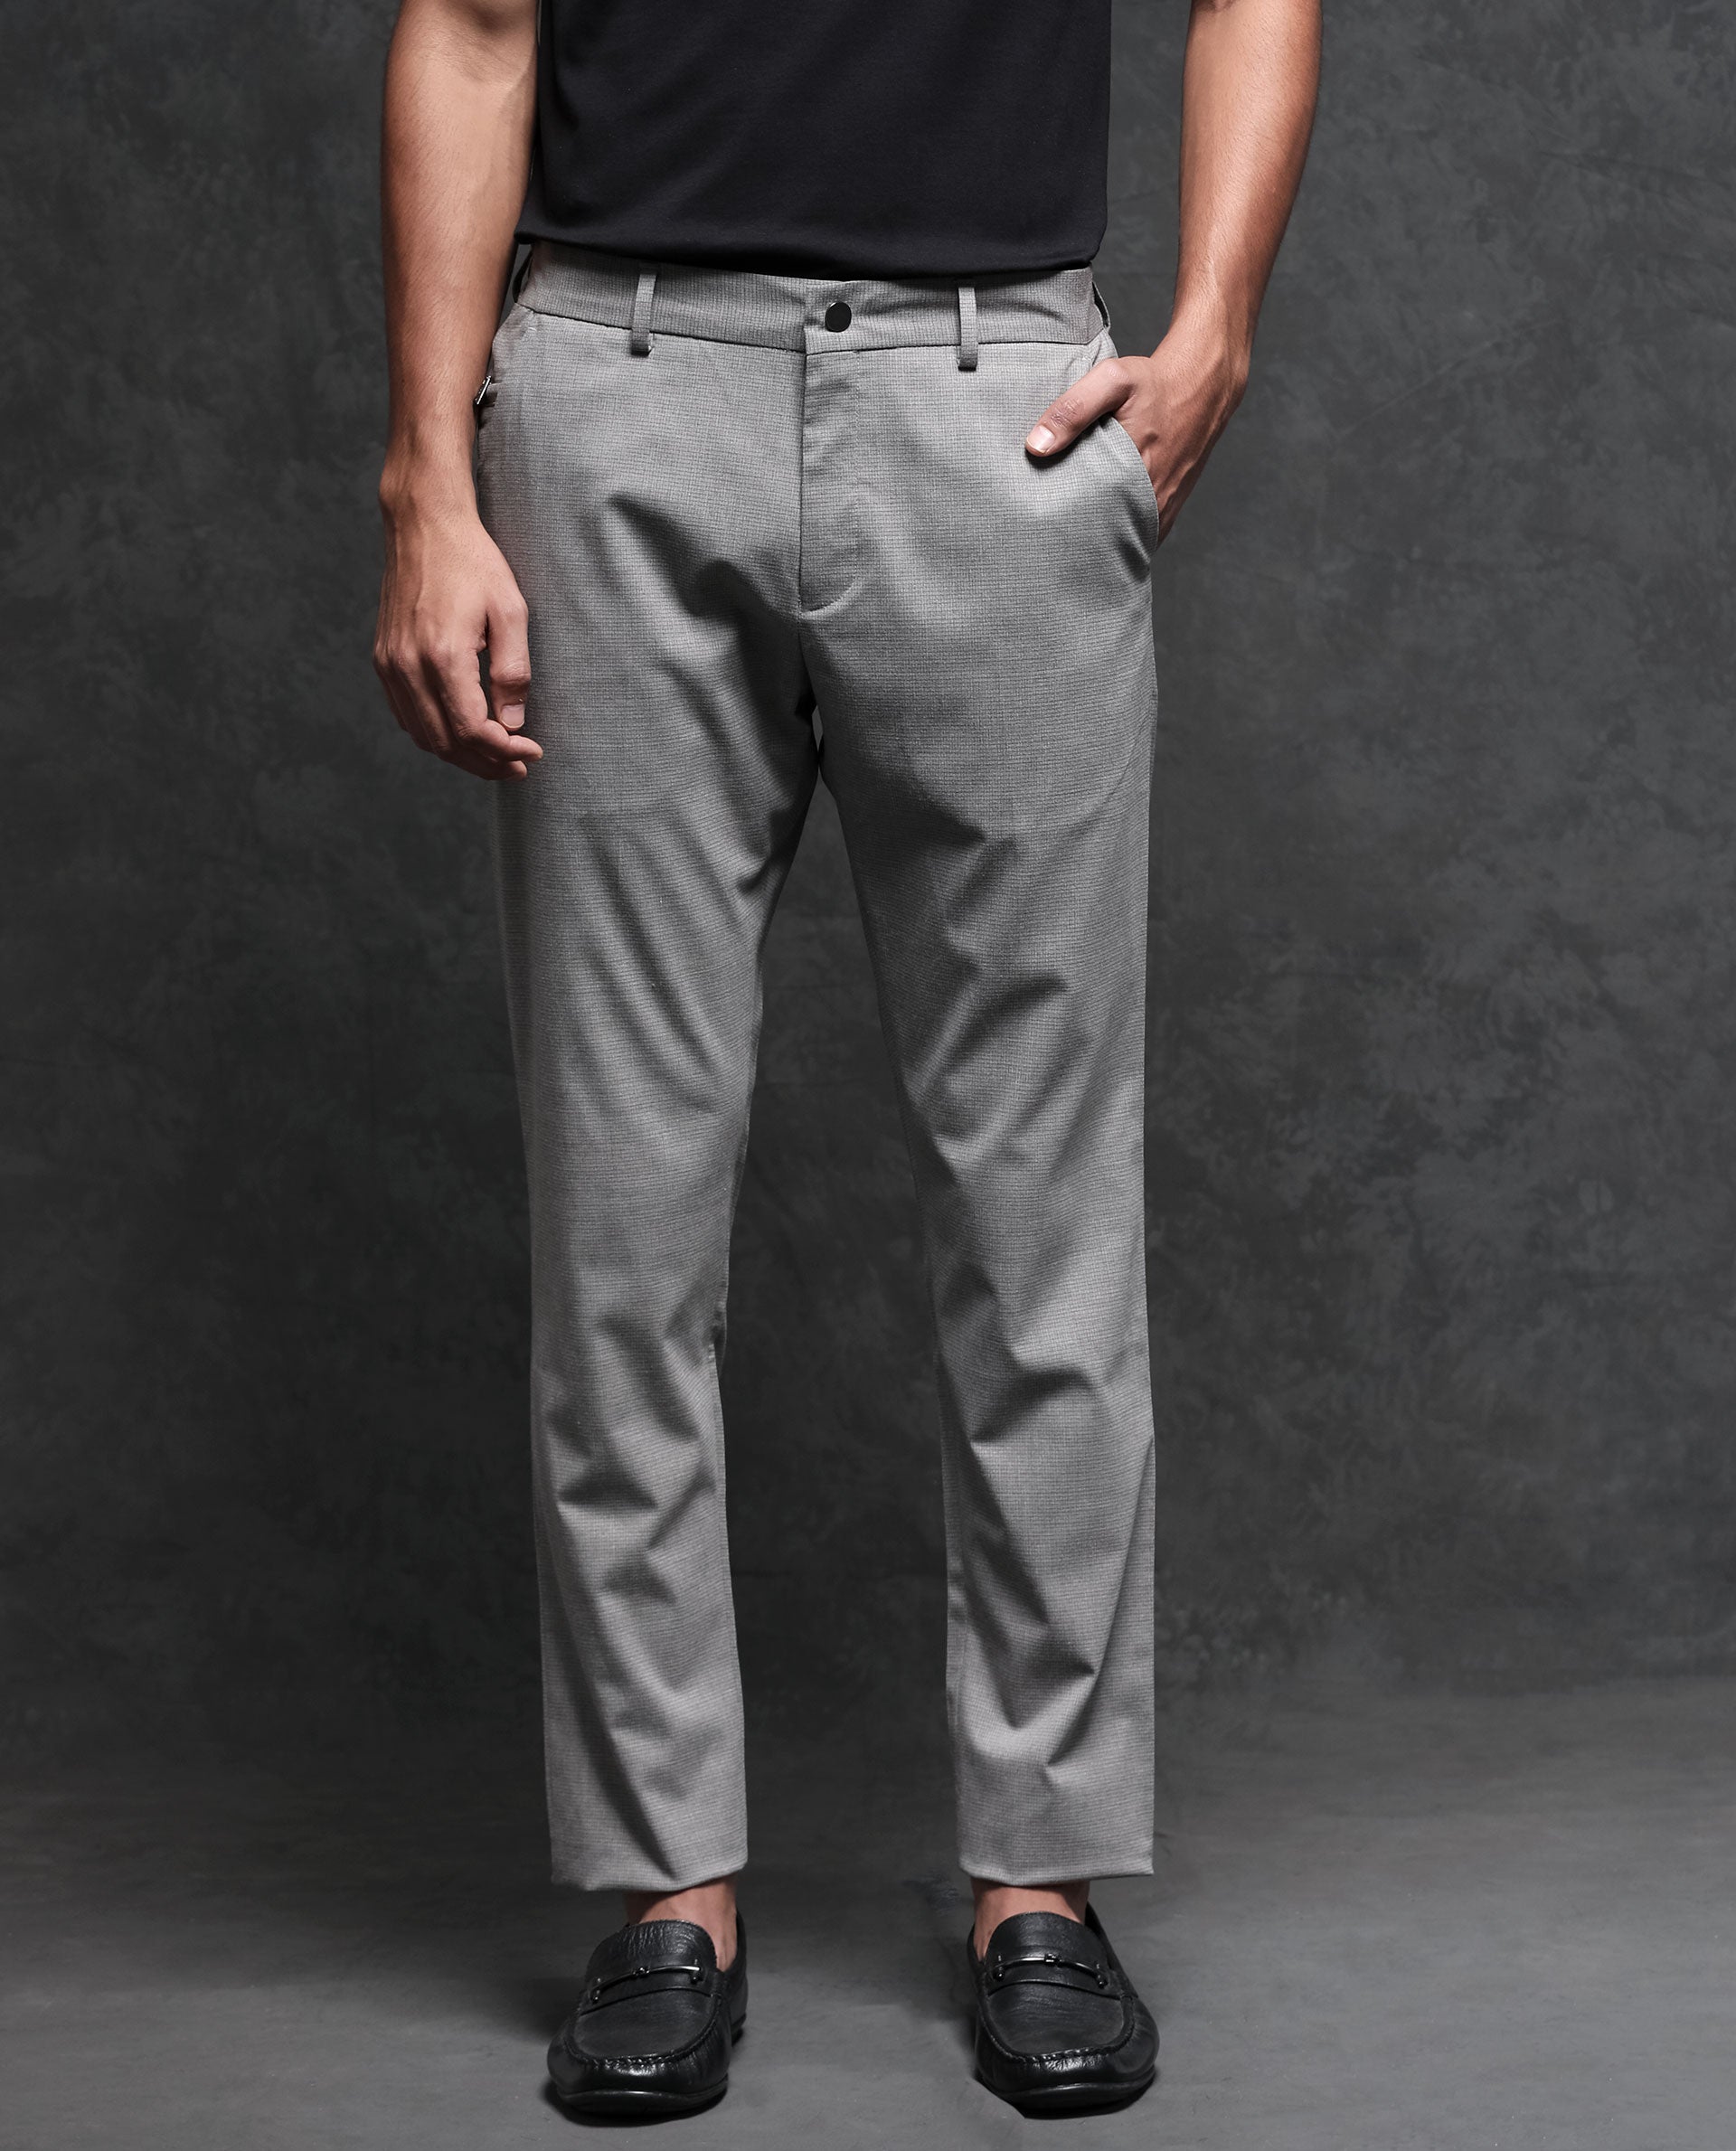 Light Pants Dress Trouser Men Straight Casual Trousers Black Gray Pants Ice  Silk | eBay